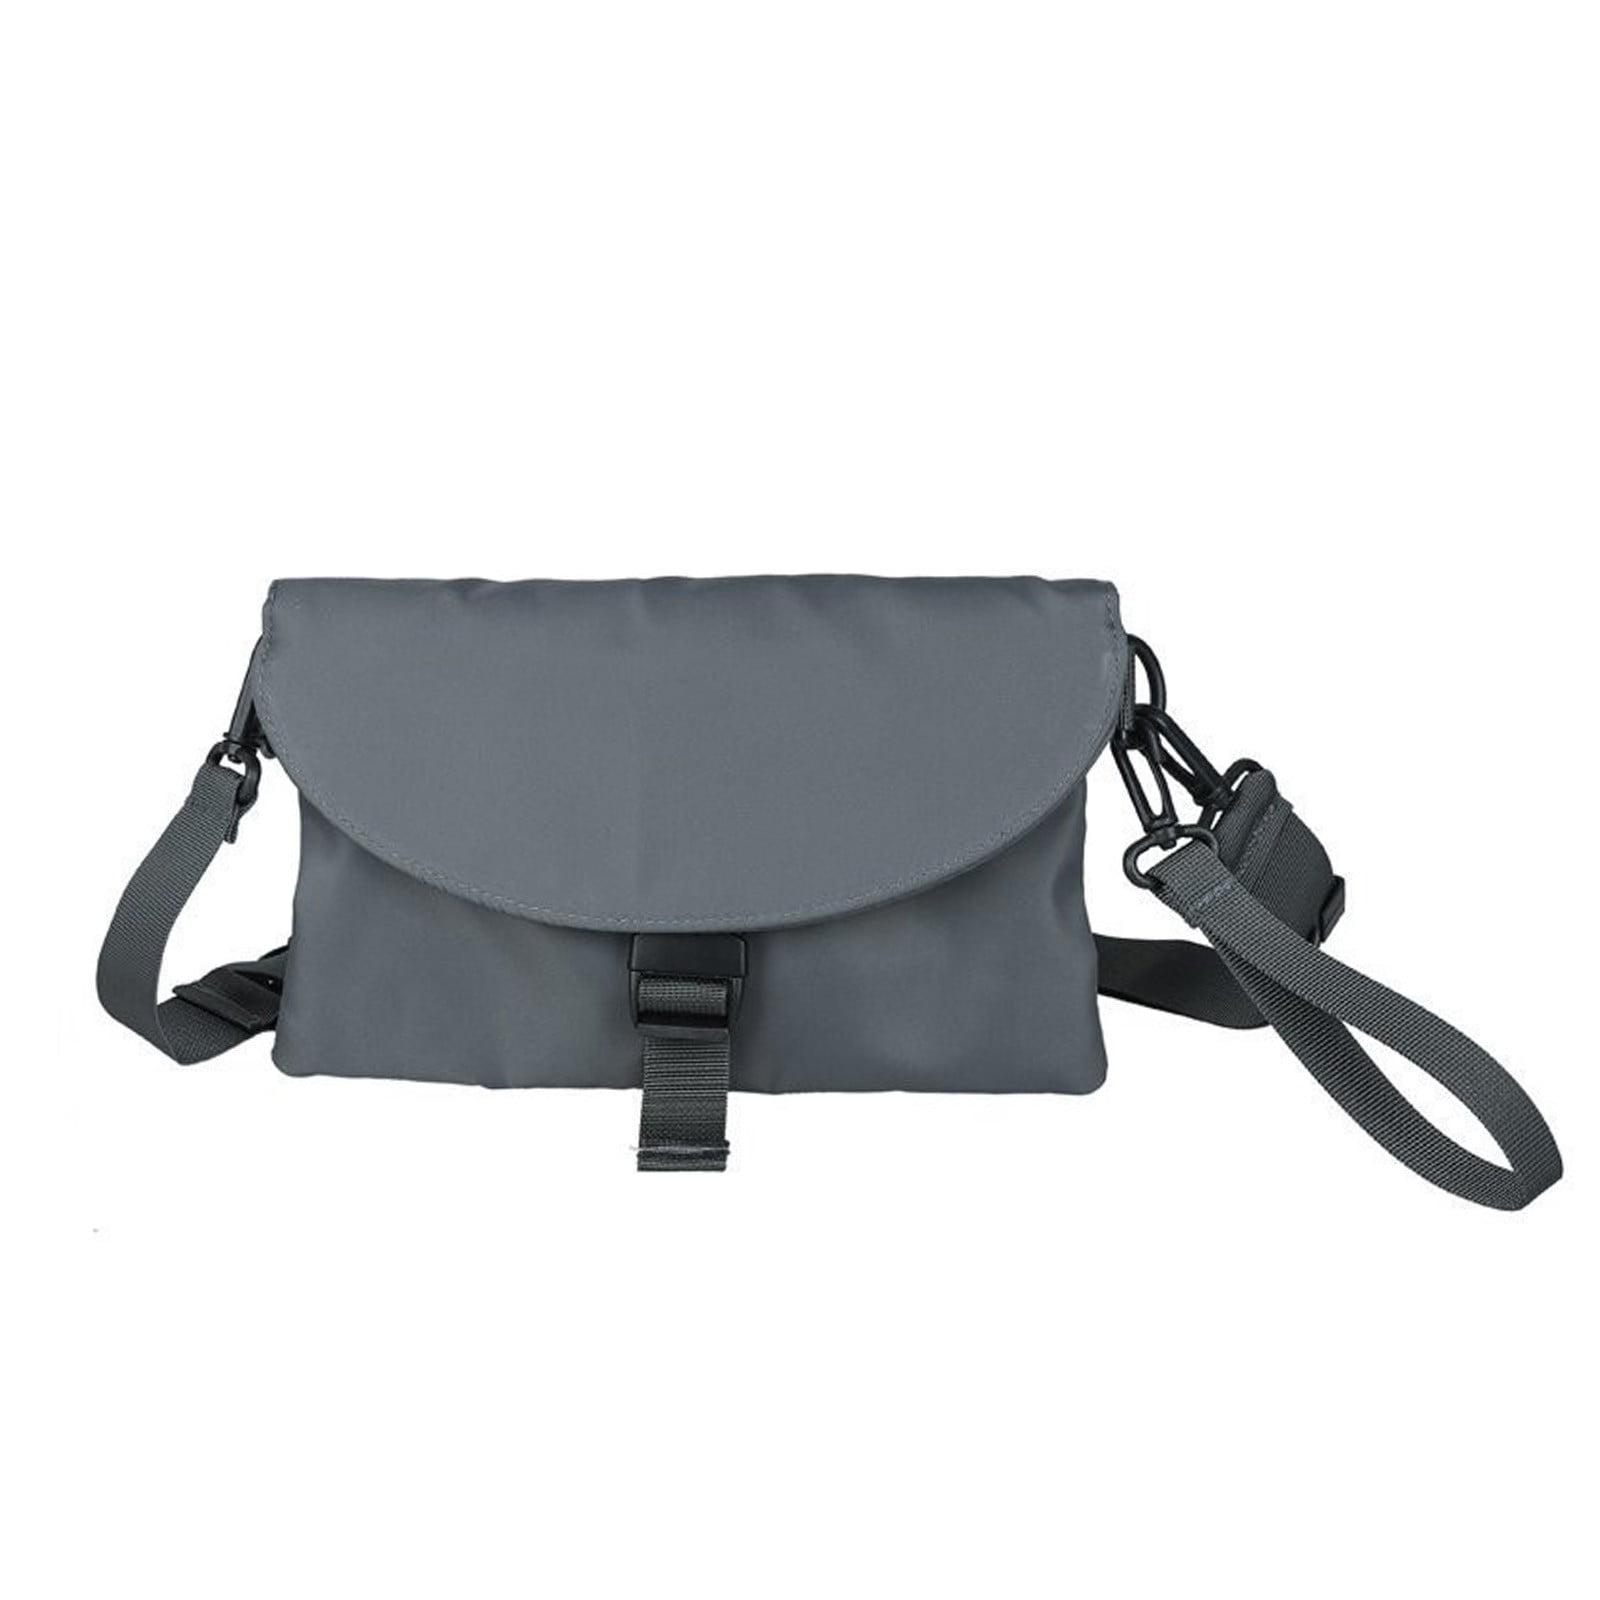 Bkfydls Kitchen Tools and Kitchen Decor in Home,Women Soft Leather Shoulder Handbag Multi Pocket Crossbody Bag Ladies Purses Fashion Tote Top Handle